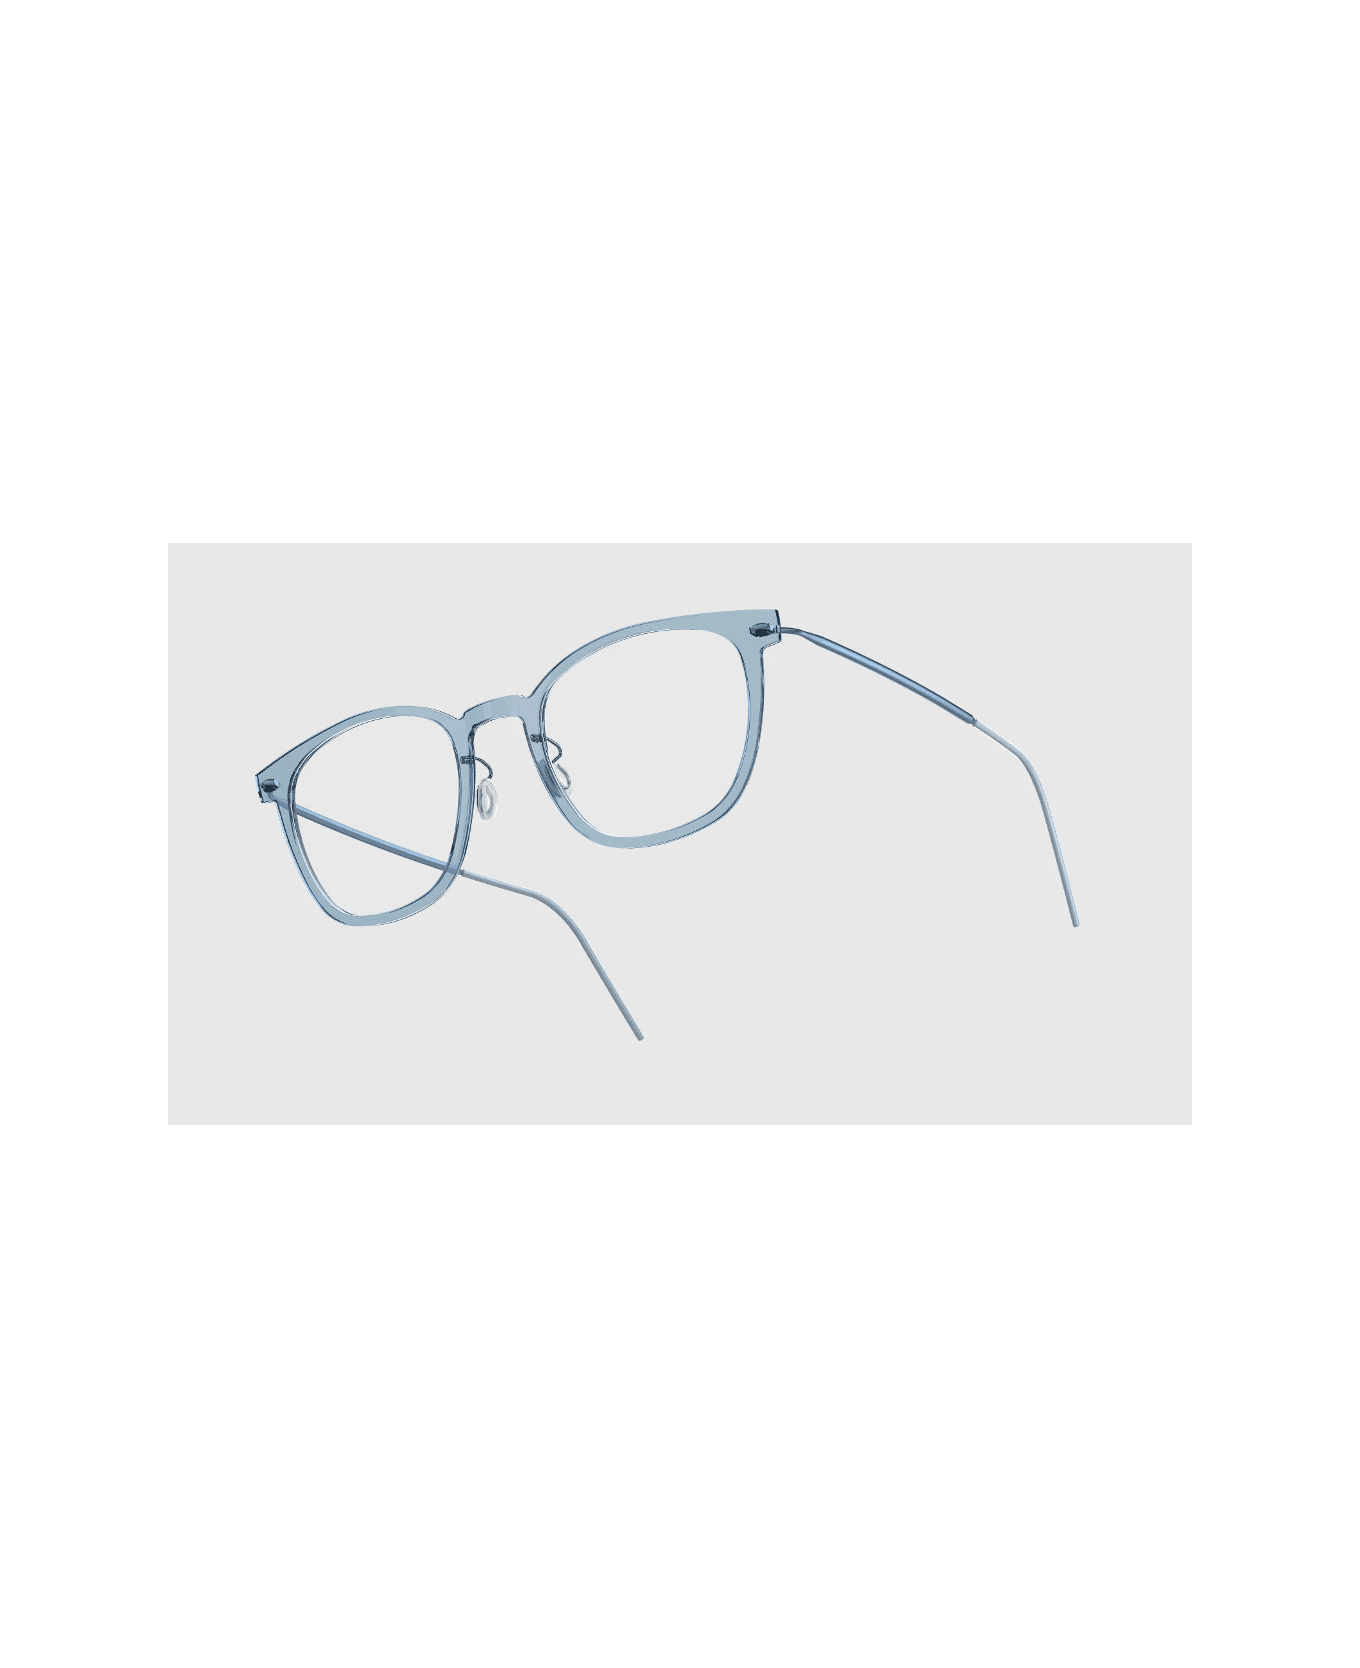 LINDBERG Now 6609 C08 Glasses